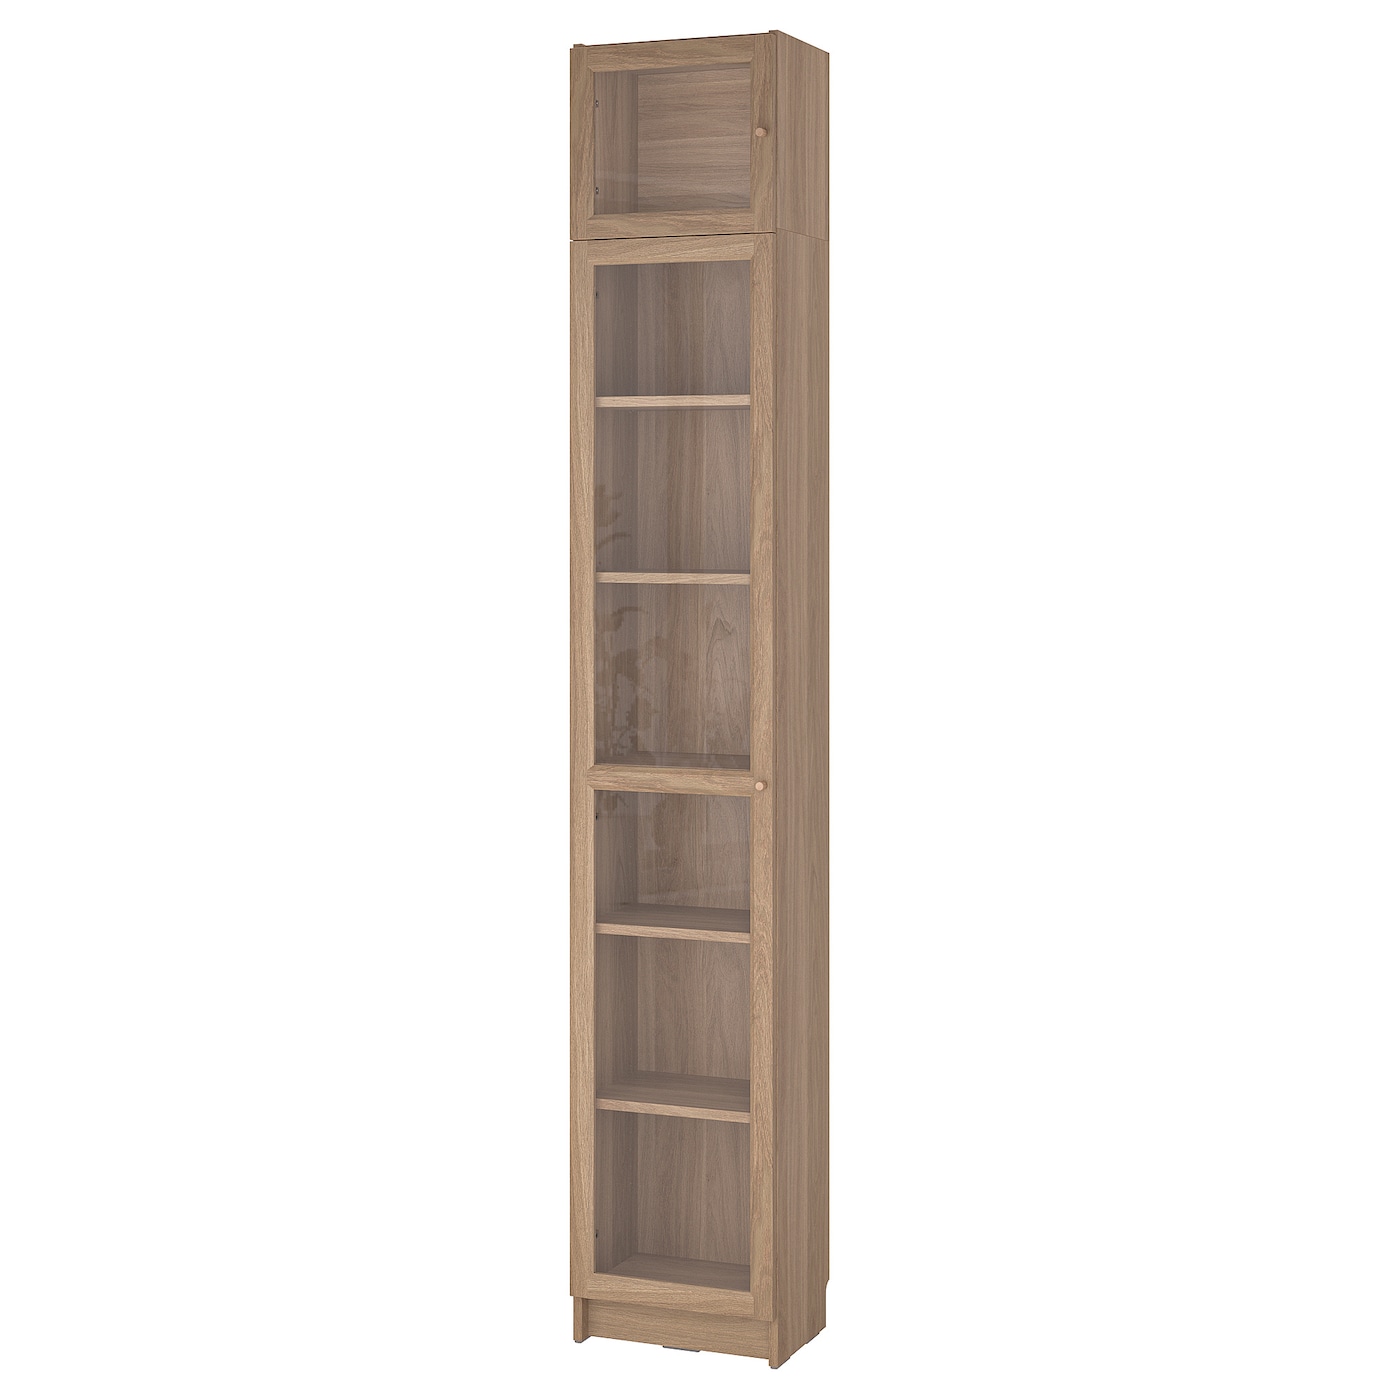 Книжный шкаф -  BILLY / OXBERG IKEA/ БИЛЛИ/ ОКСБЕРГ ИКЕА,40х30х237 см, под беленый дуб